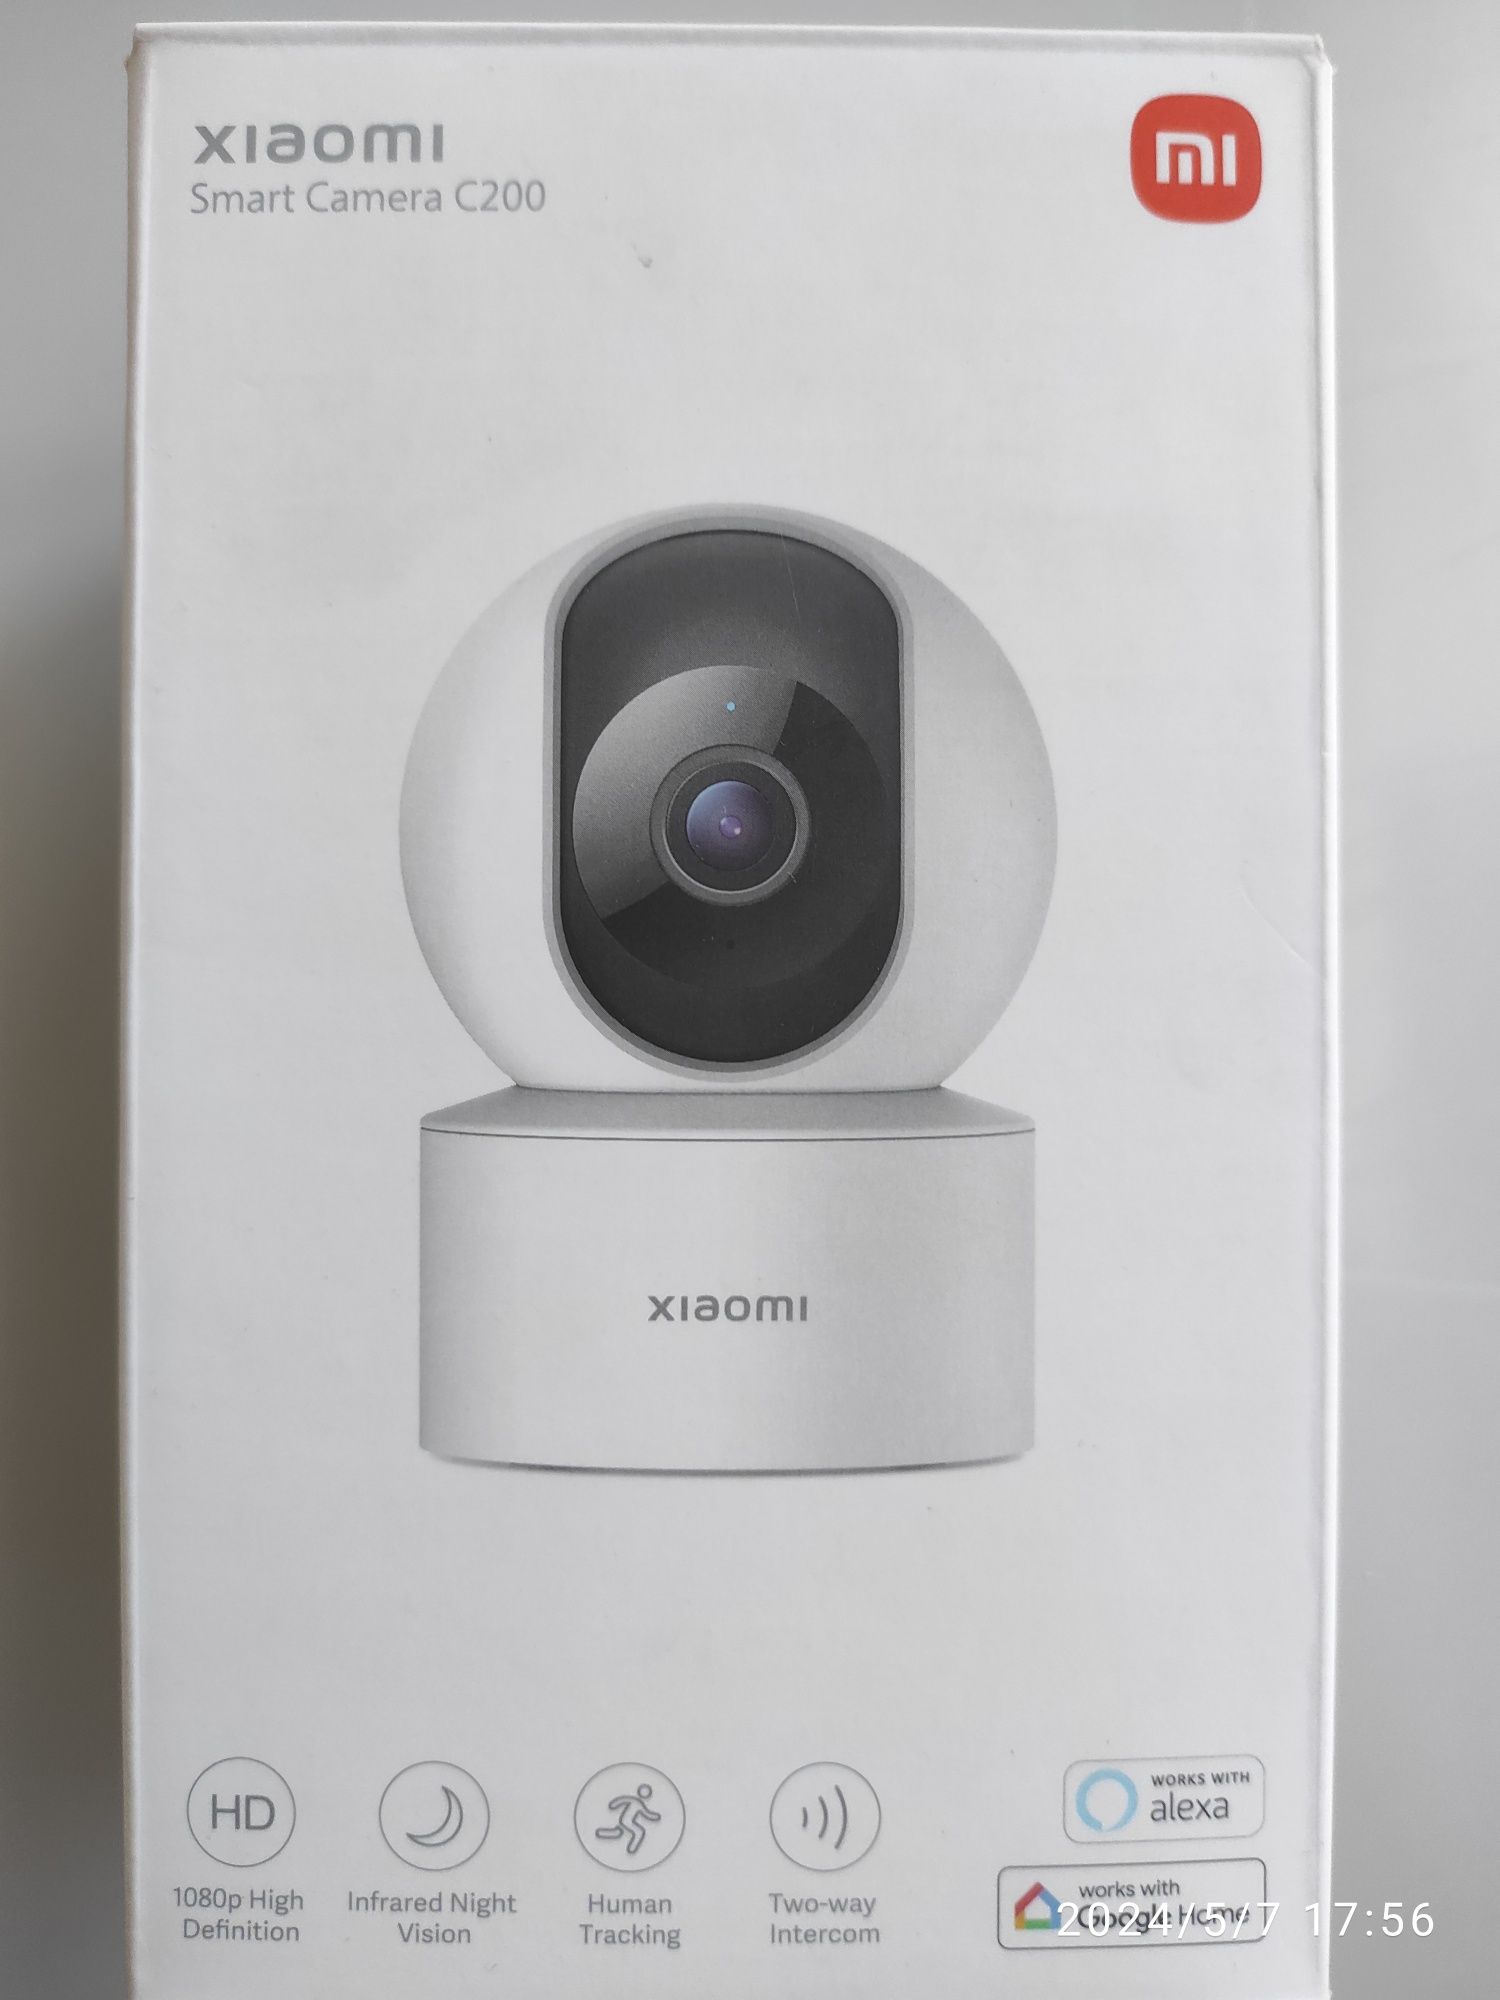 Xiaomi smart camera c200